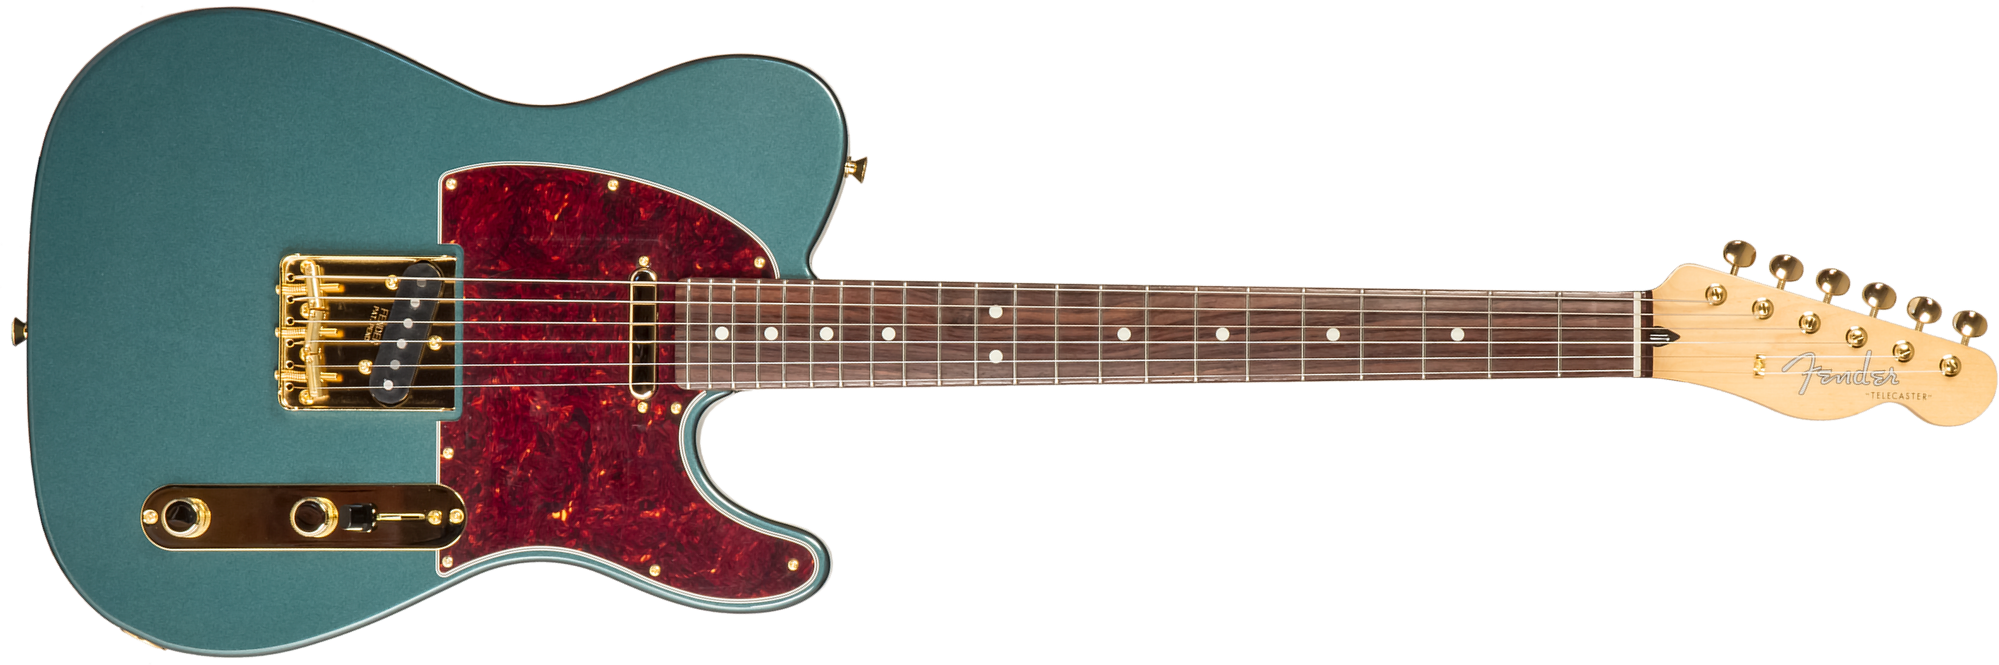 Fender Tele Hybrid Ii Jap 2s Ht Rw - Sherwood Green Metallic - Guitarra eléctrica con forma de tel - Main picture